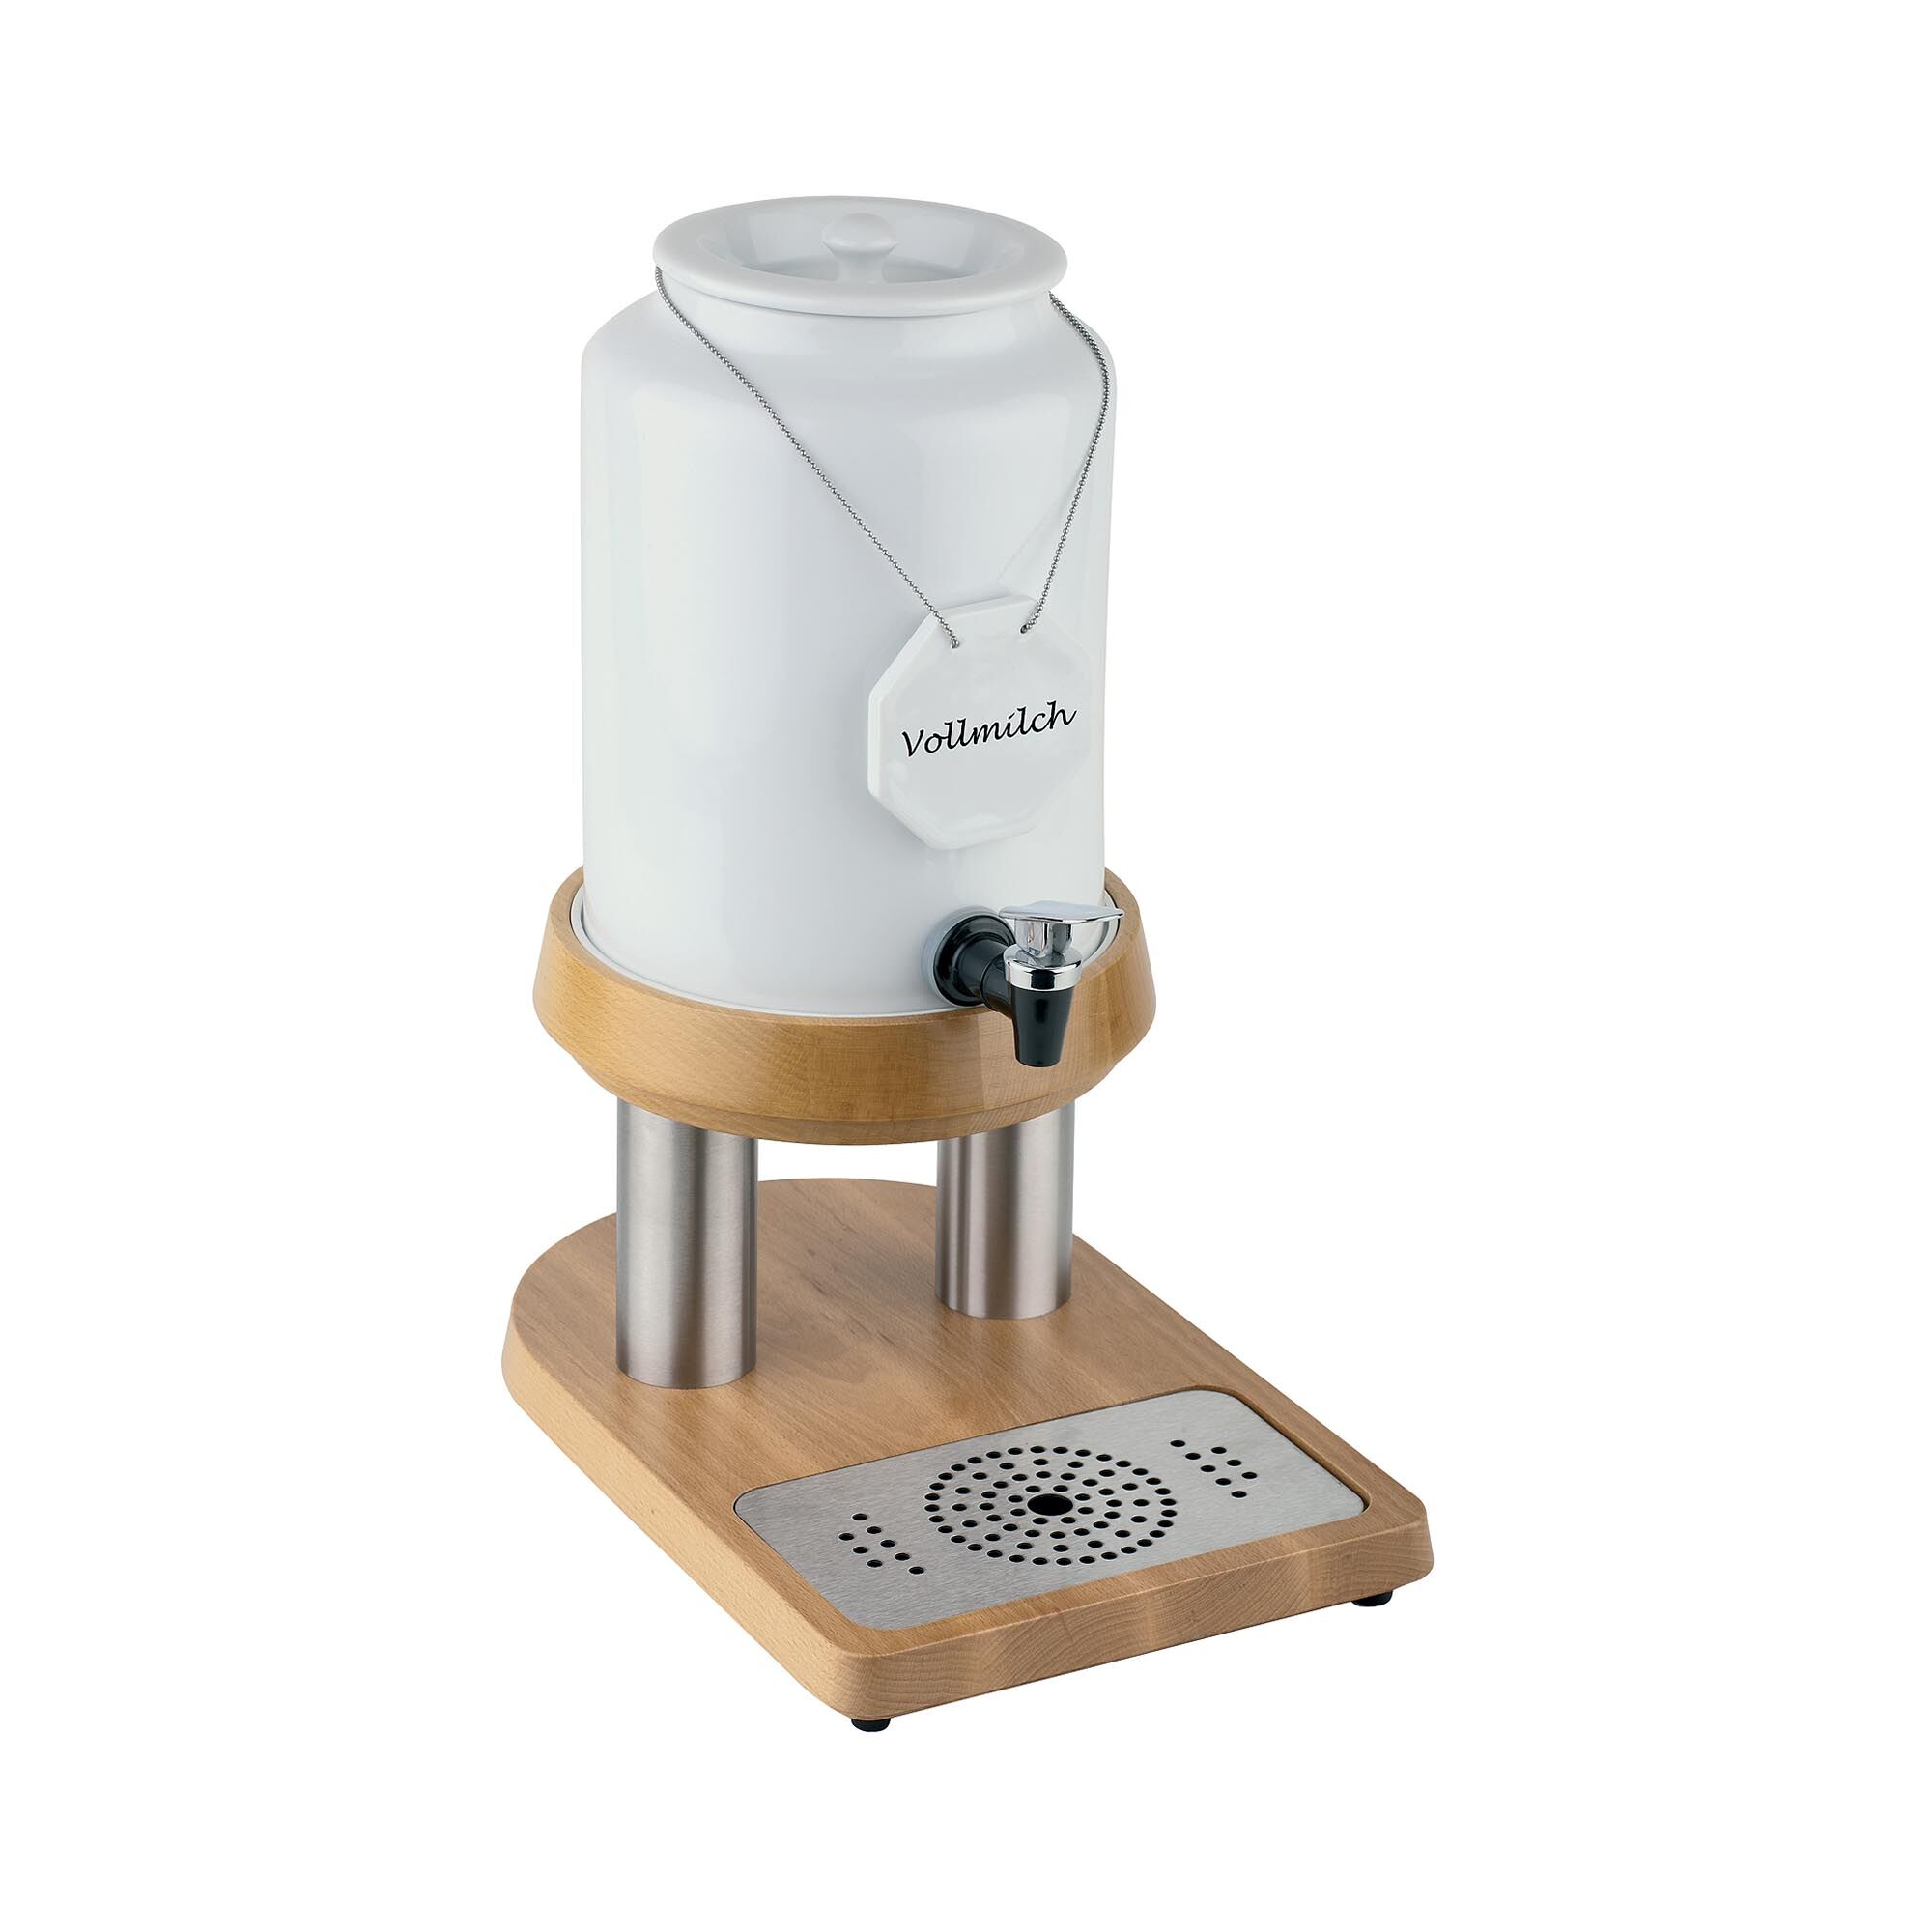 APS Milk Dispenser - Stainless steel, wood, porcelain - 4 L